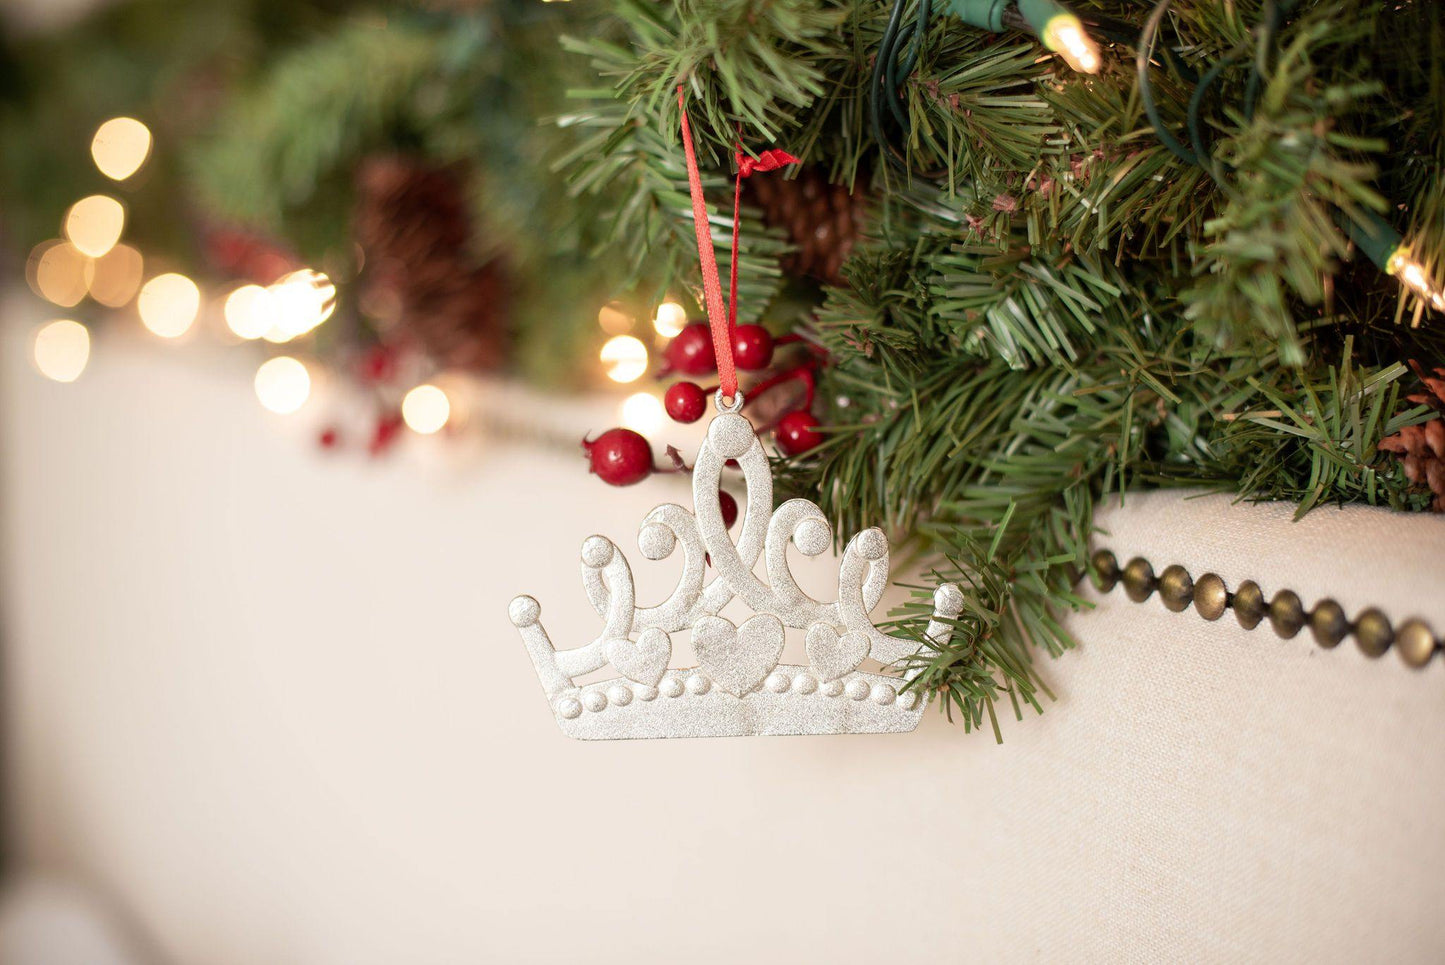 USA Handmade Princess Crown Keepsake Little Girl Christmas Ornament Pewter - House of Morgan Pewter